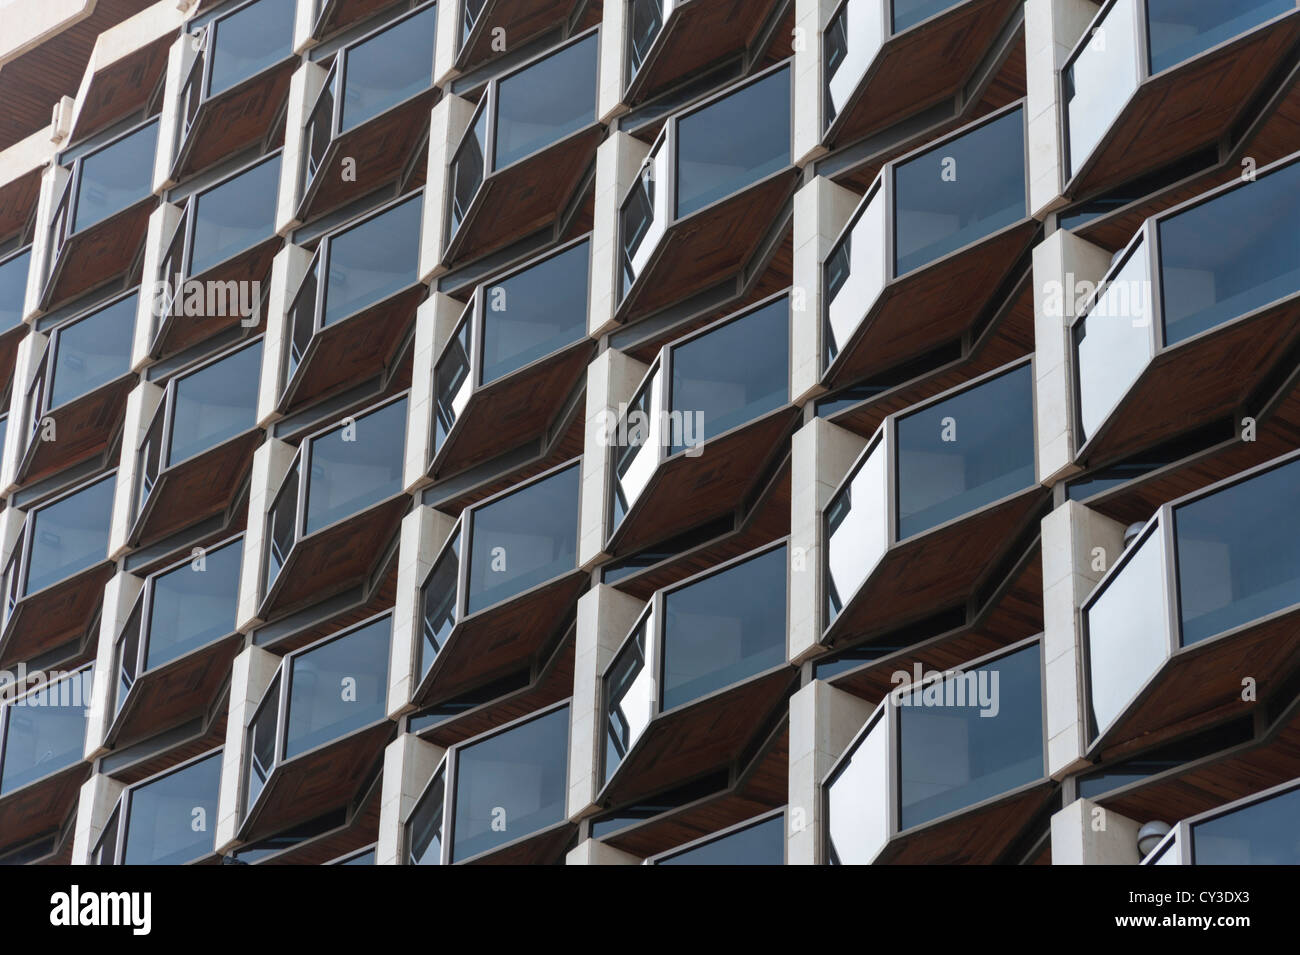 Glass balconies on the Hotel Cristina Las Palmas Gran Canaria Canary Islands Spain - a modern tower block Stock Photo